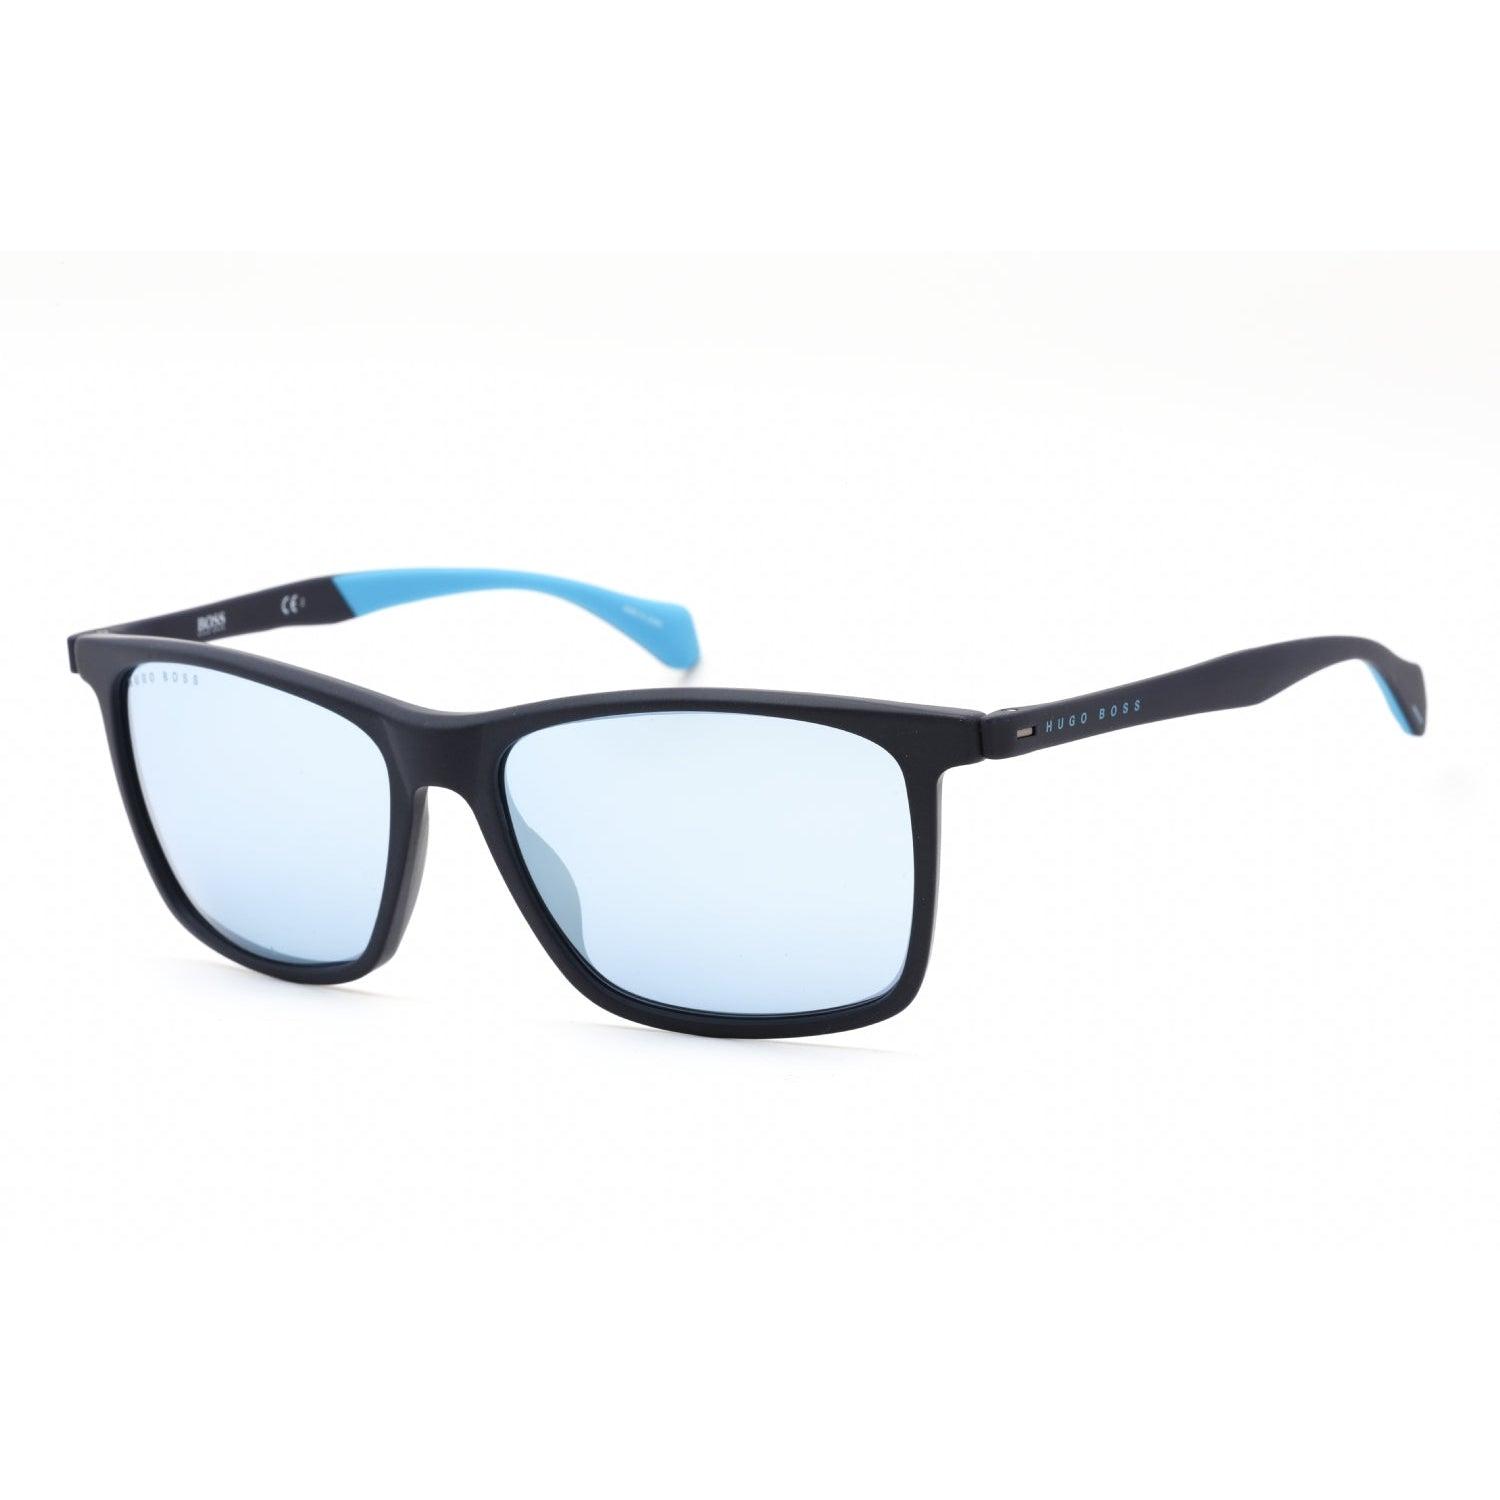 BOSS by HUGO BOSS Boss 1078/s Sunglasses Matte Blue / Azure Mirror for ...